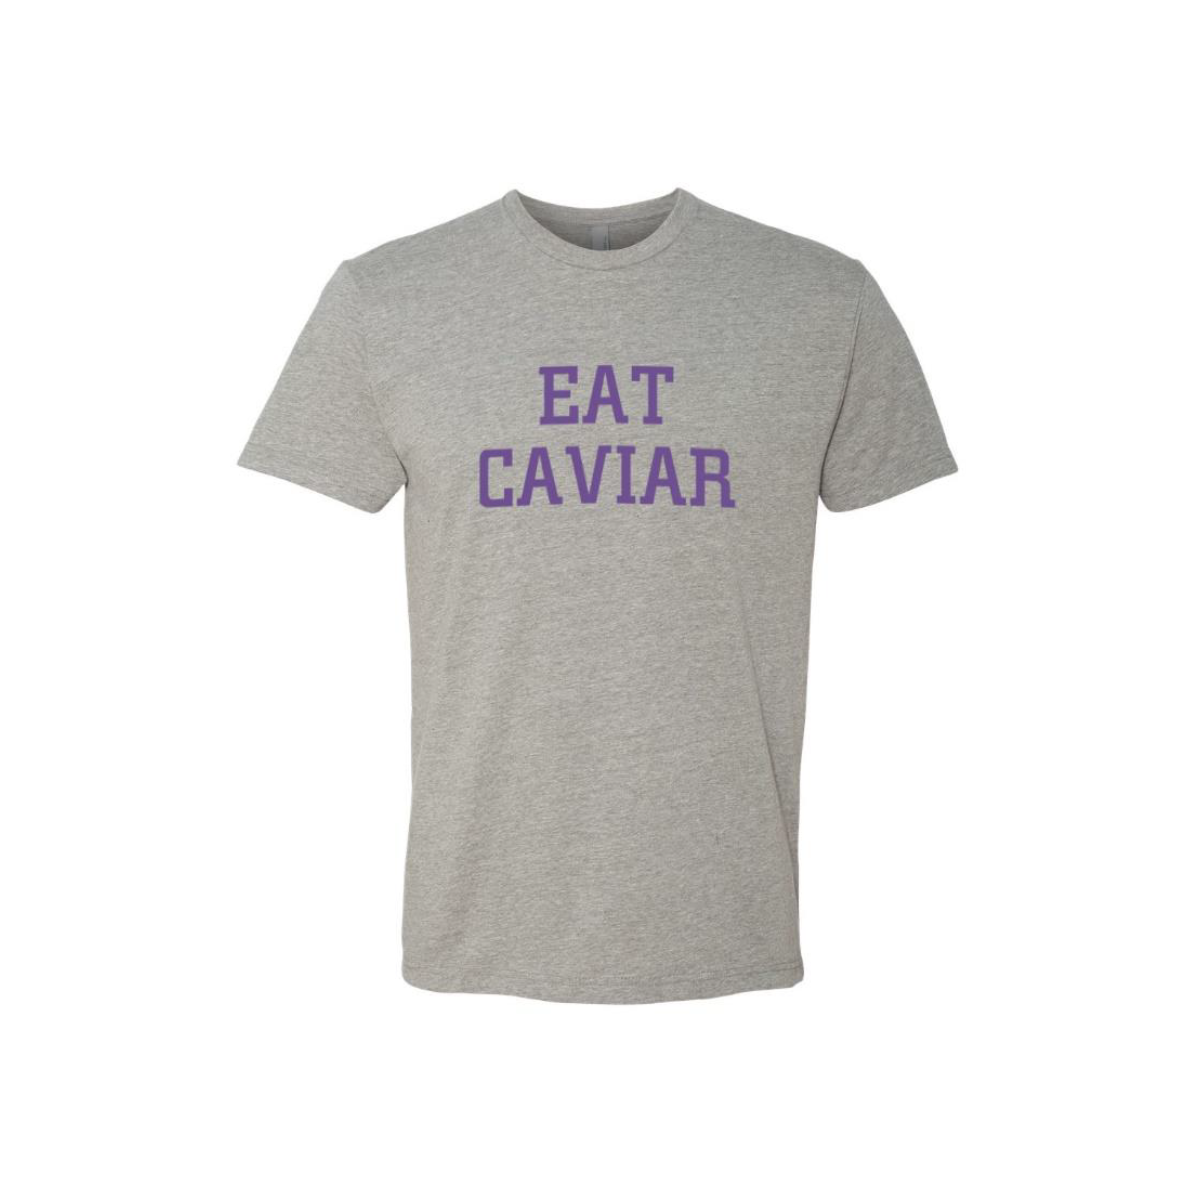 Unisex Eat Caviar Tee - Grey